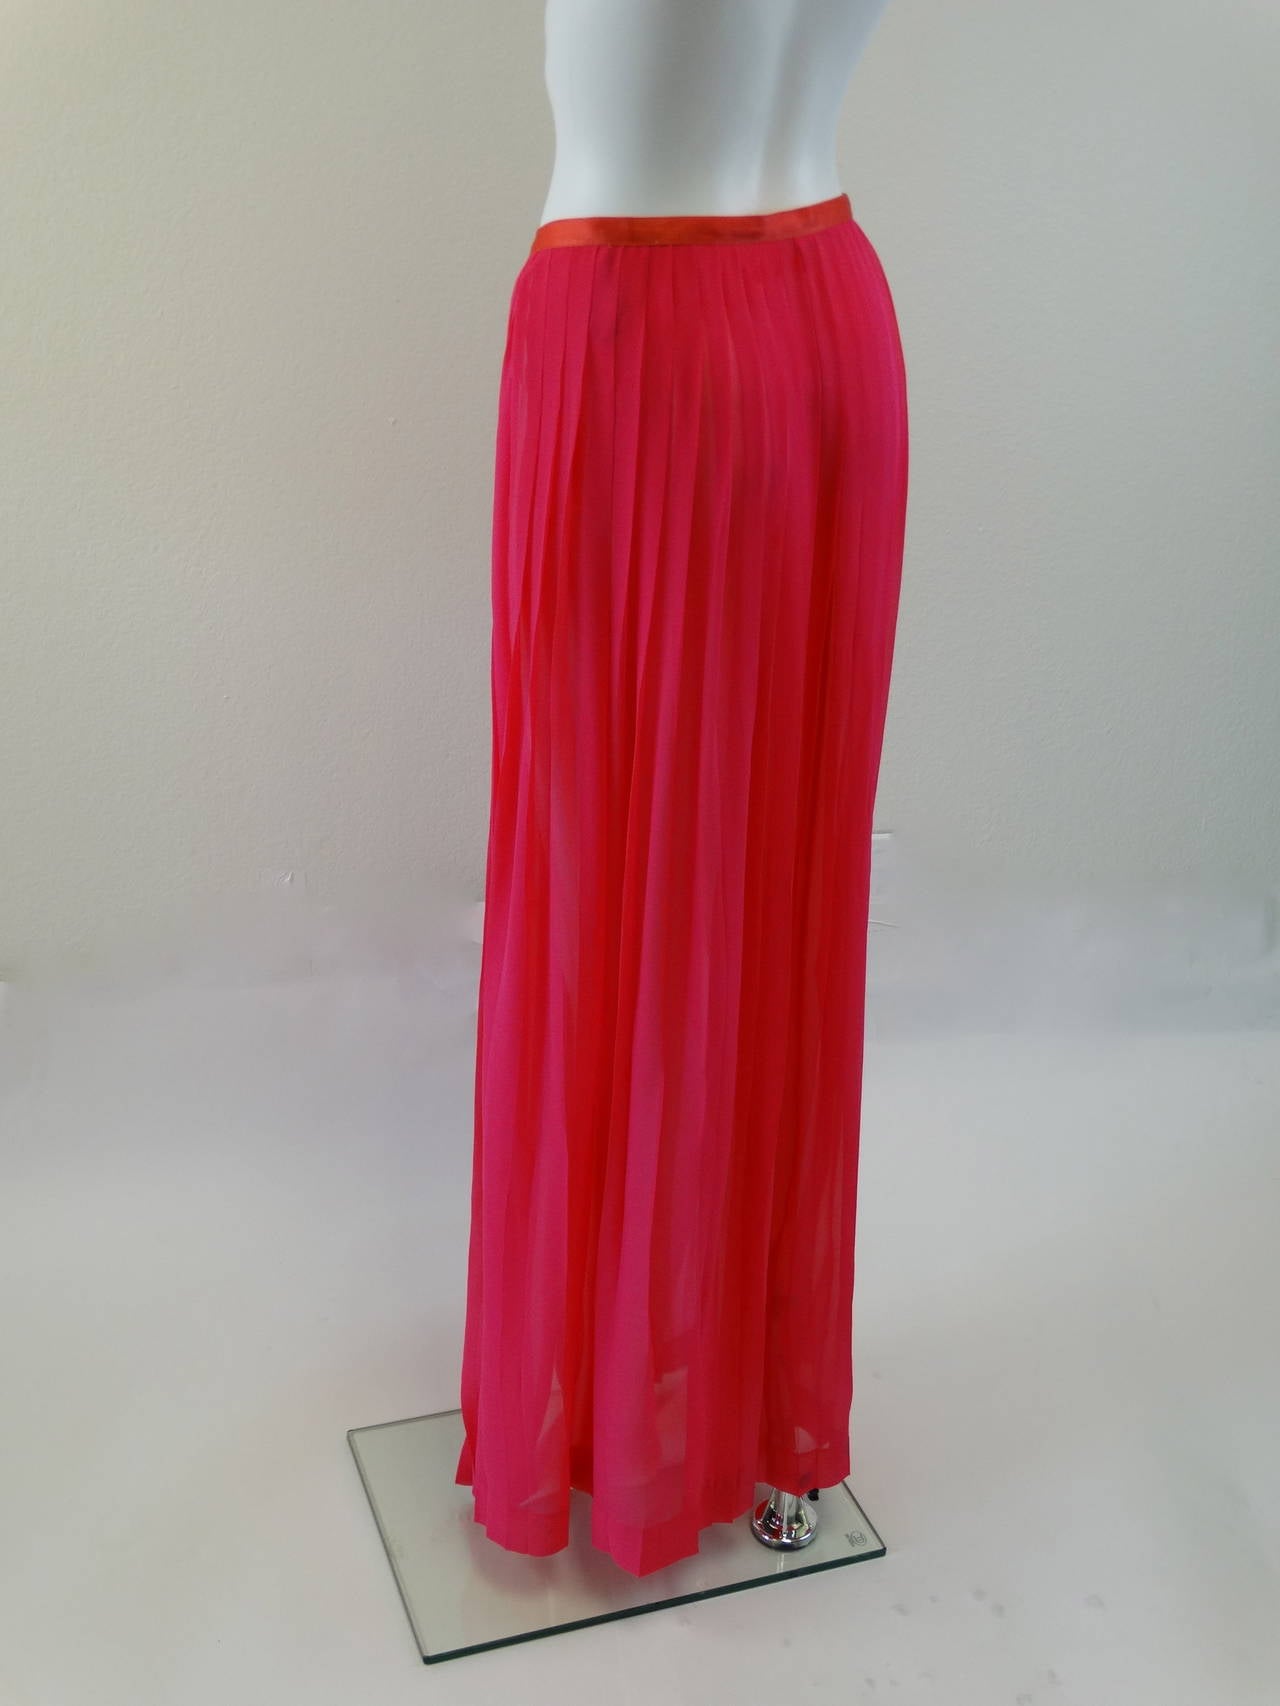 Yves Saint Laurent Electric Pink Accordion Silk Dress Skirt Set, 1980s  2